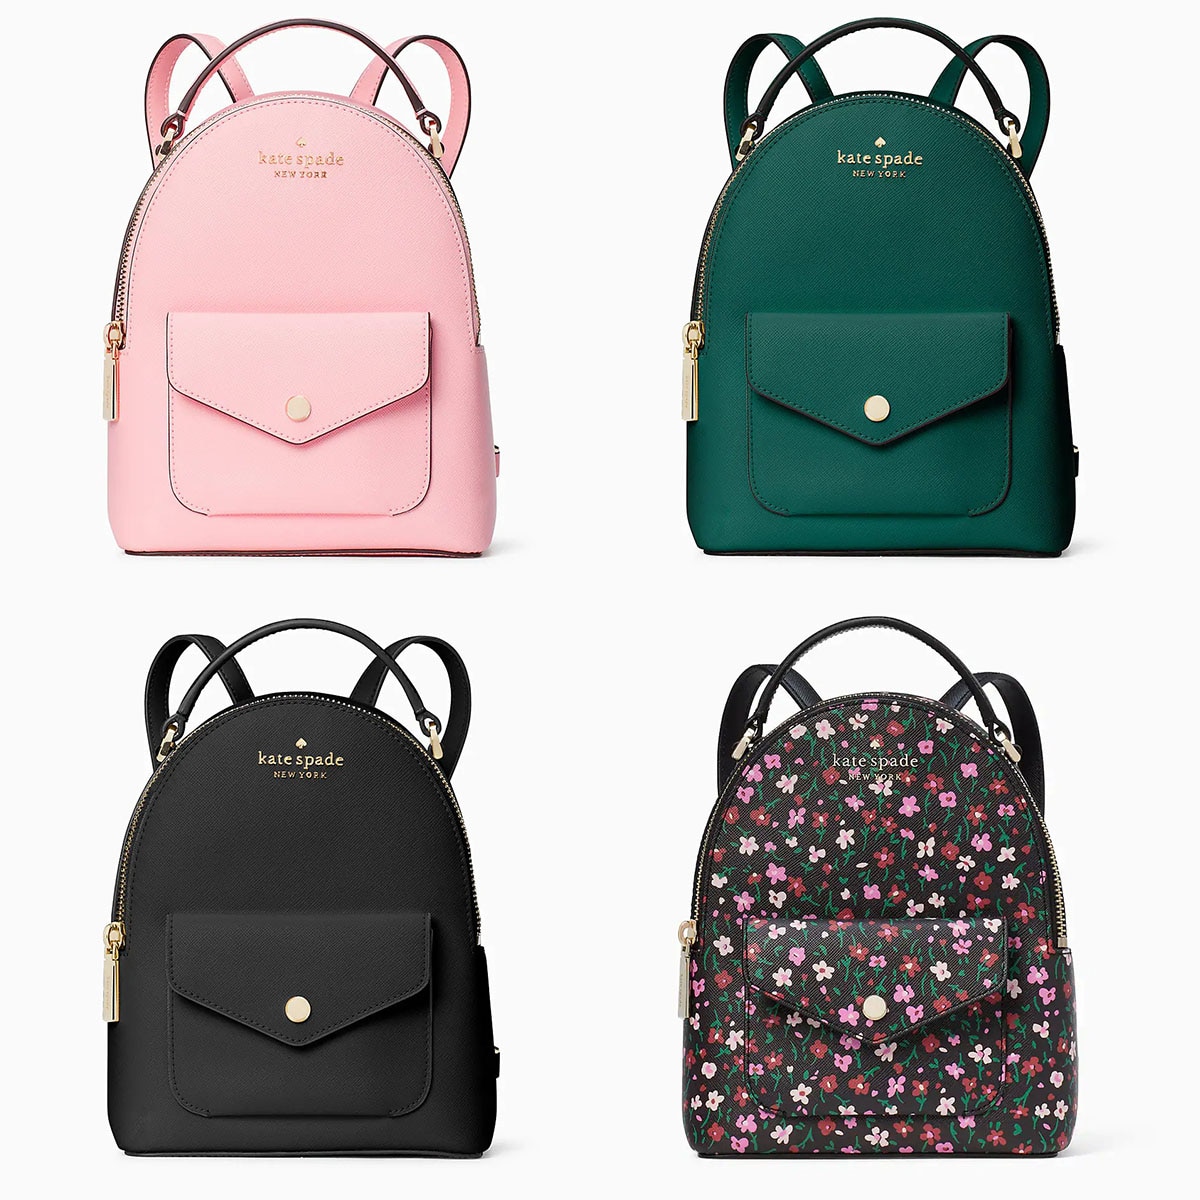 Moda Luxe, Bags, Moda Luxe Heather Suede Convertible Backpack